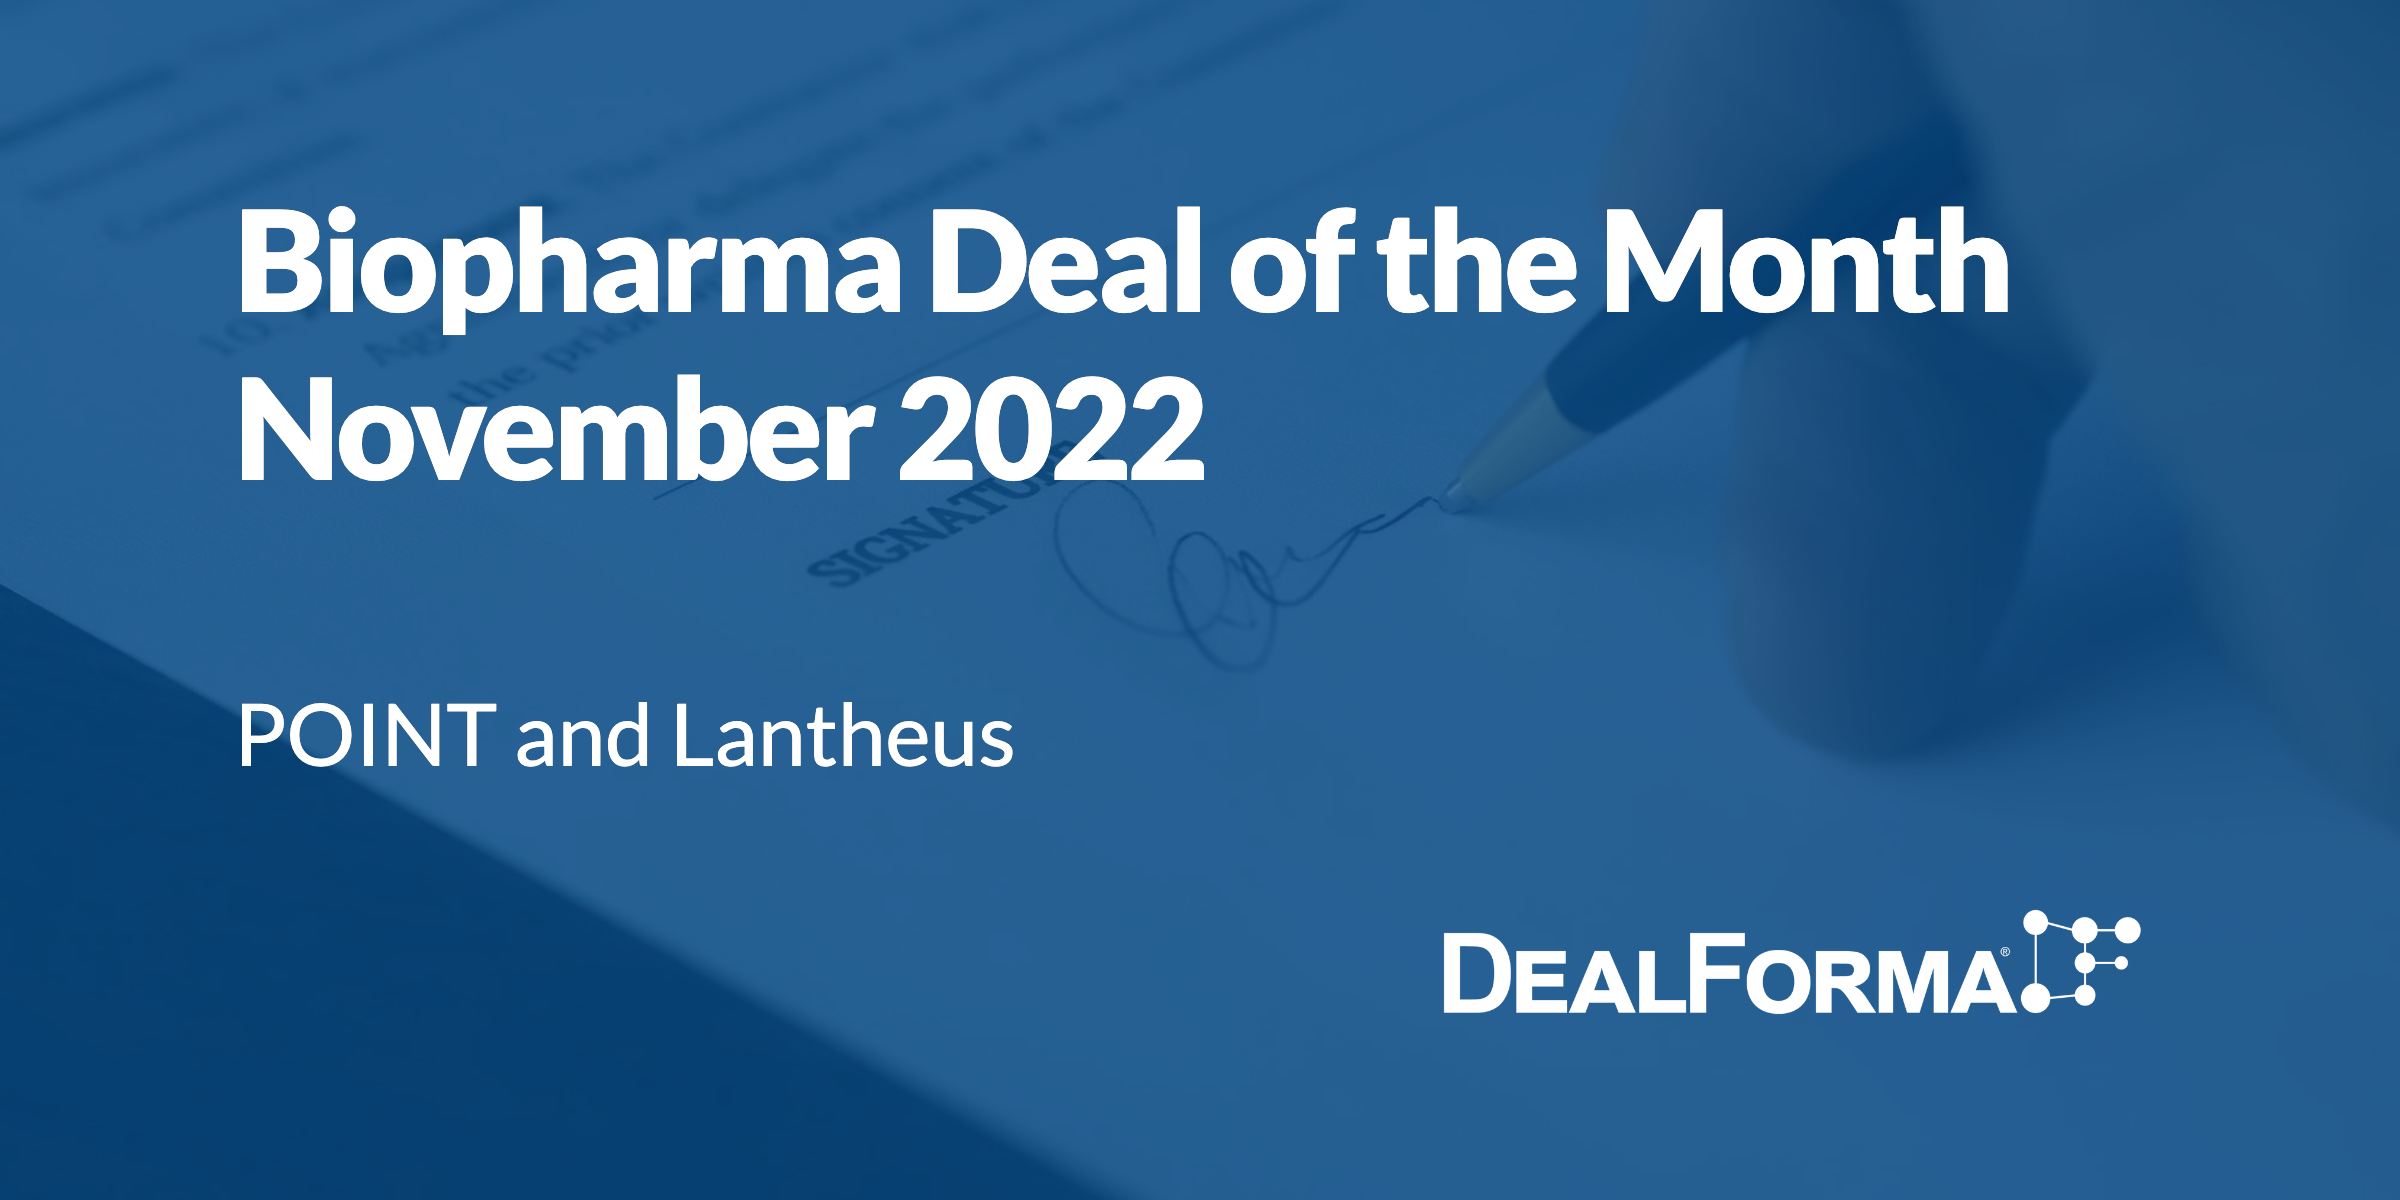 Top biopharma deal upfront Nov 2022